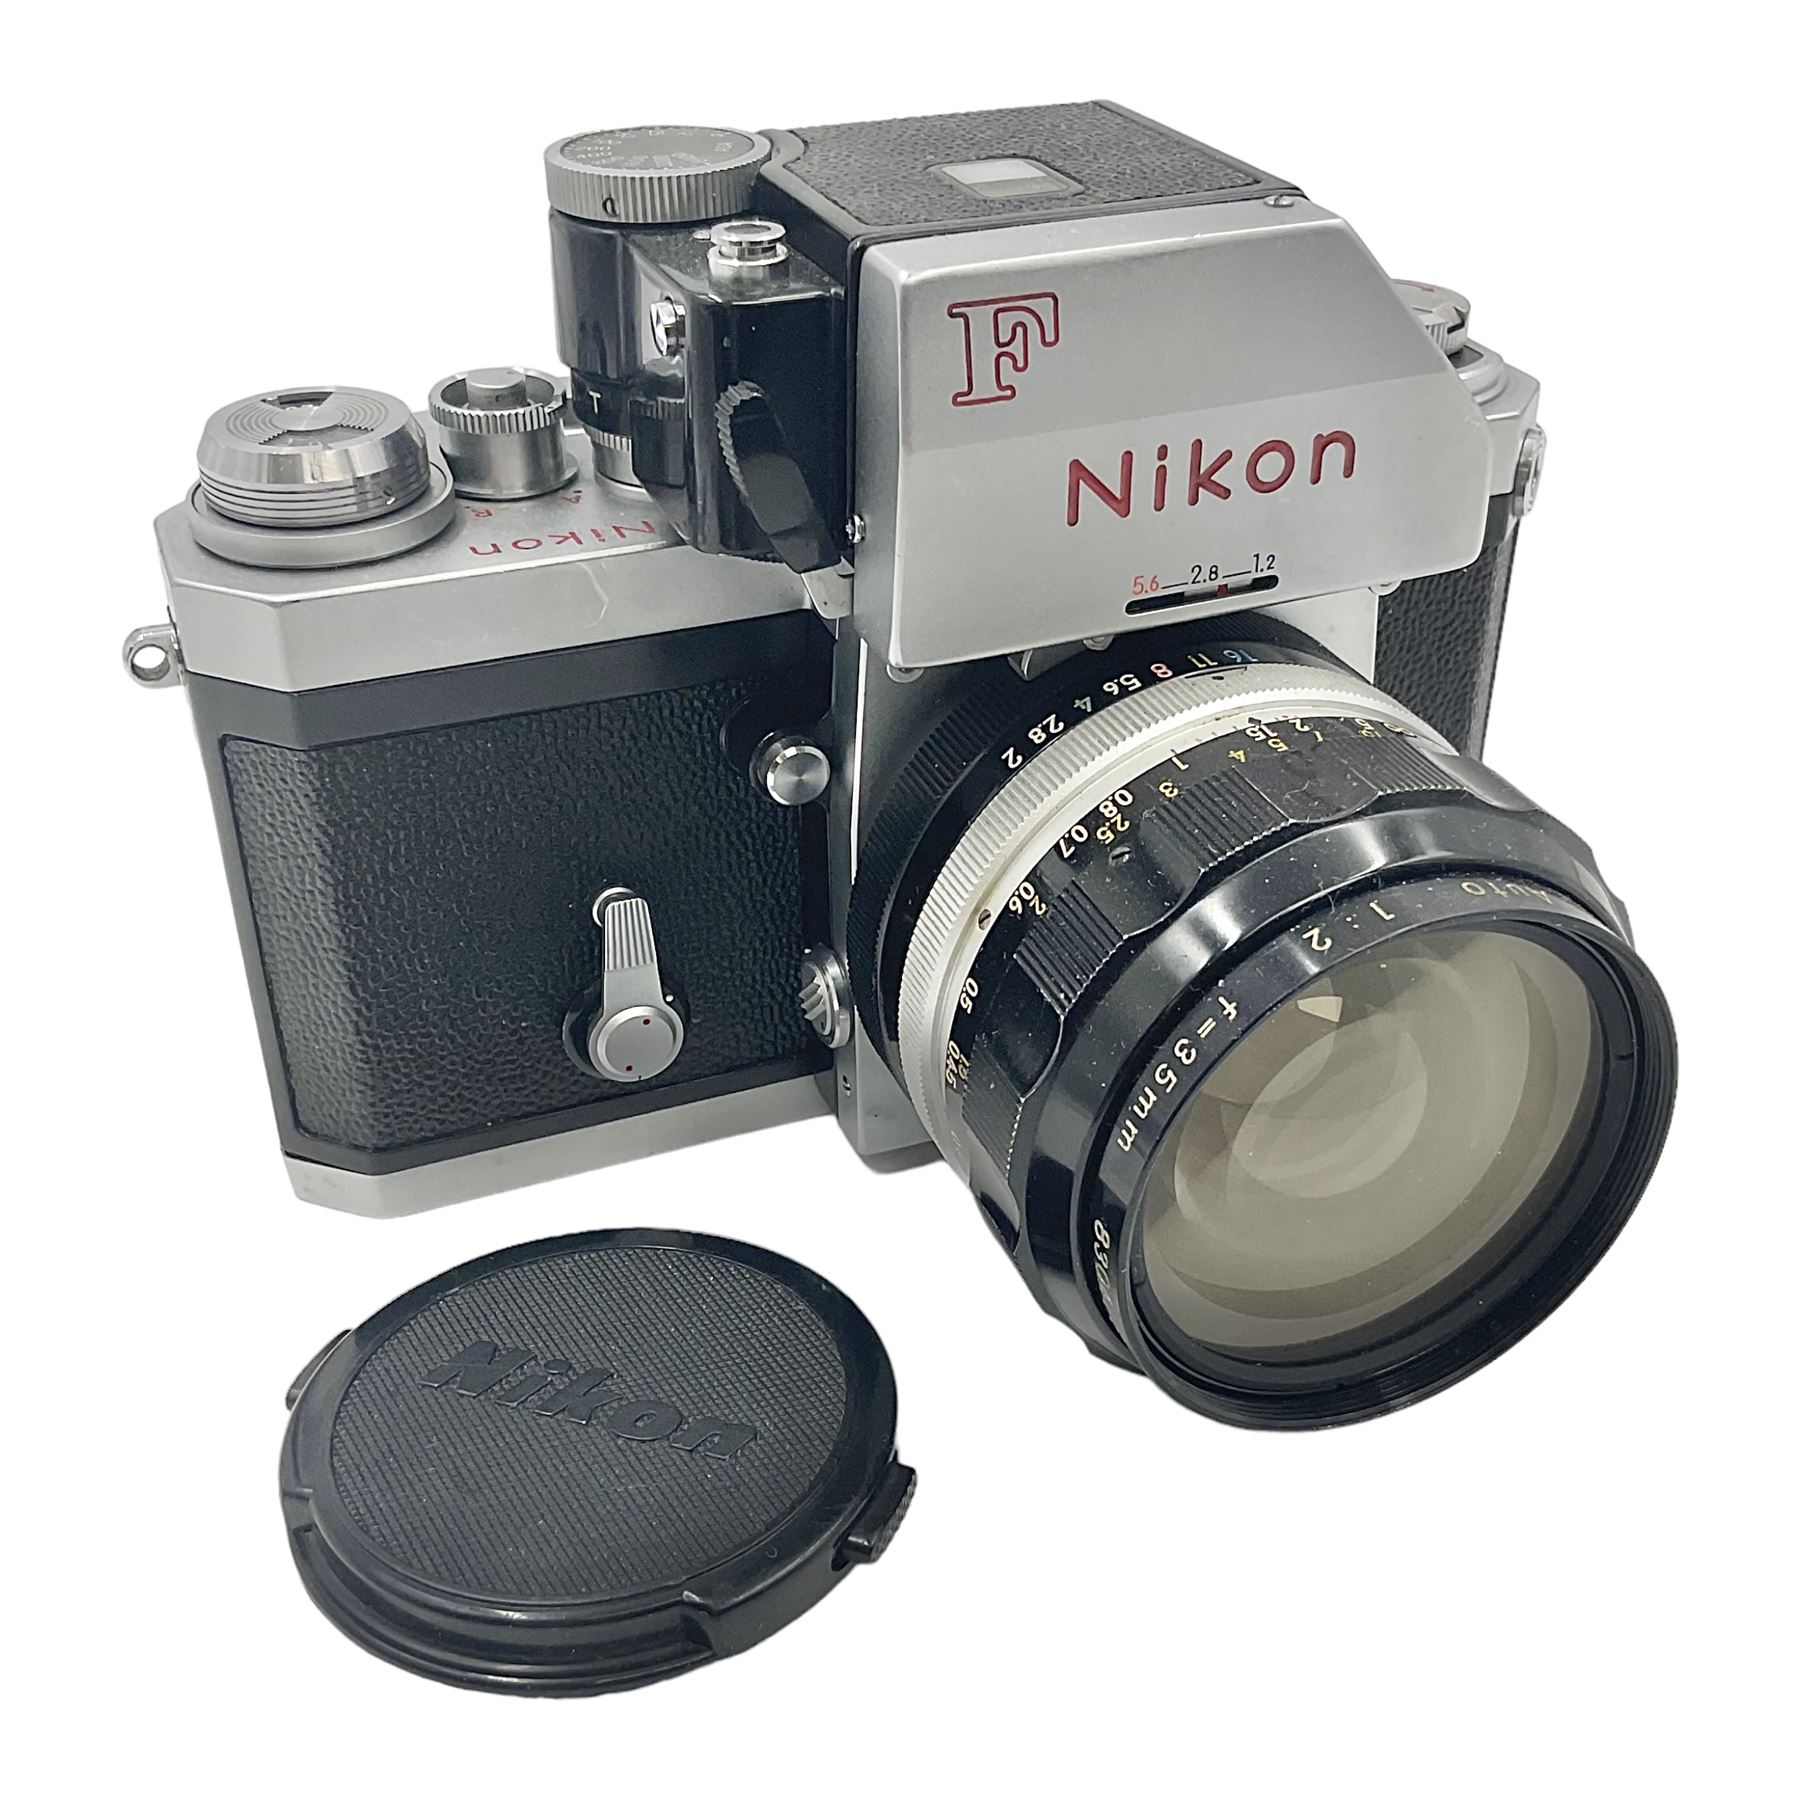 Nikon photomic Ftn camera body